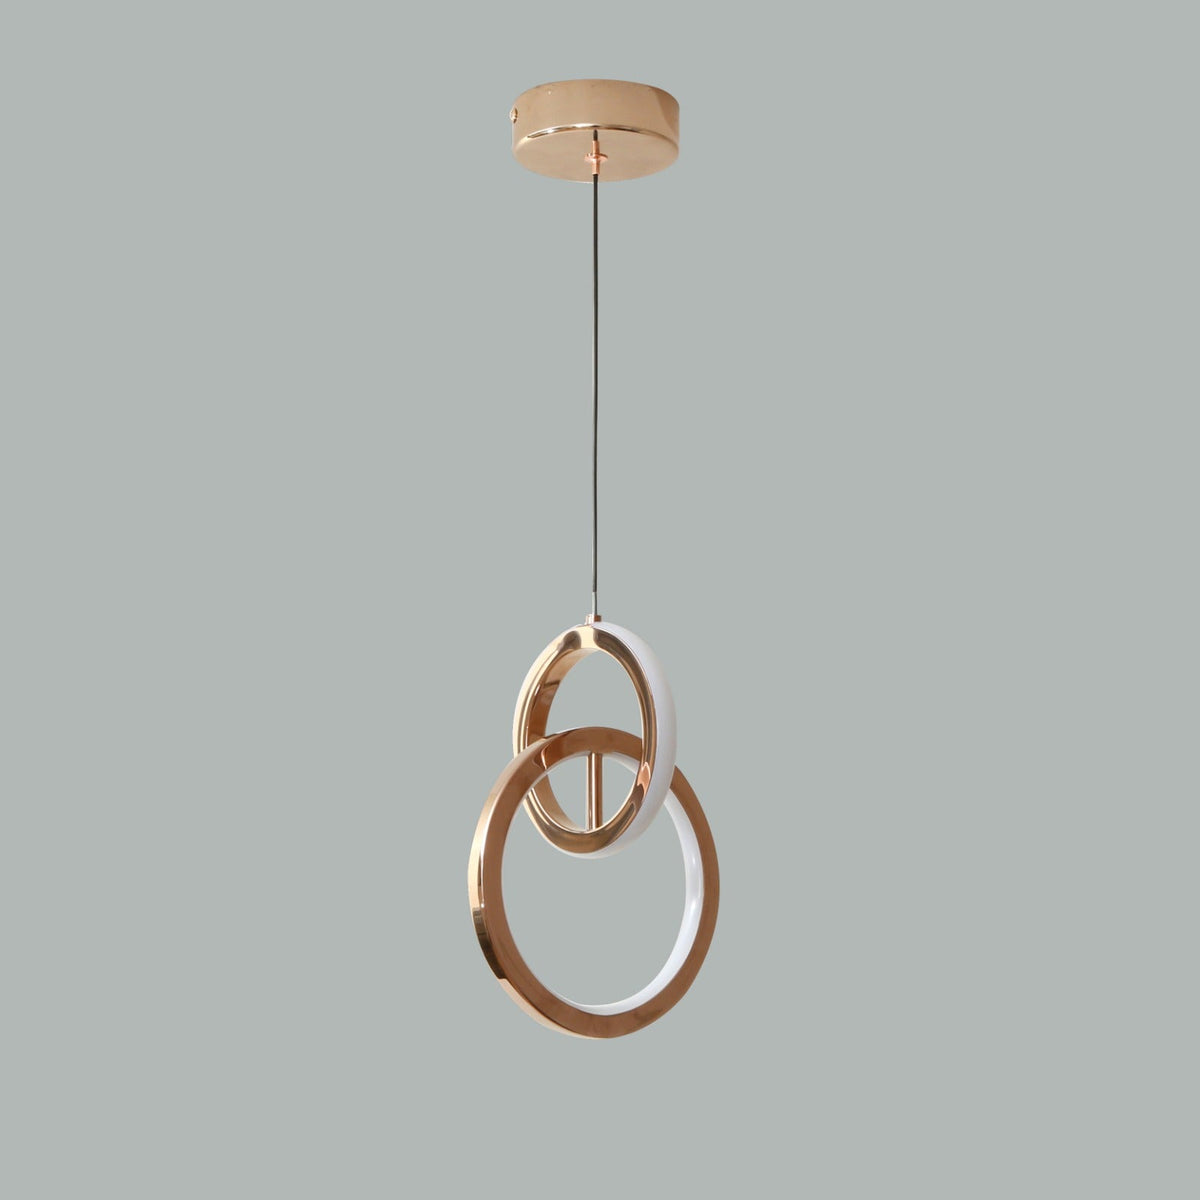 Shop See Through LED Pendant Light Hanging Lamp